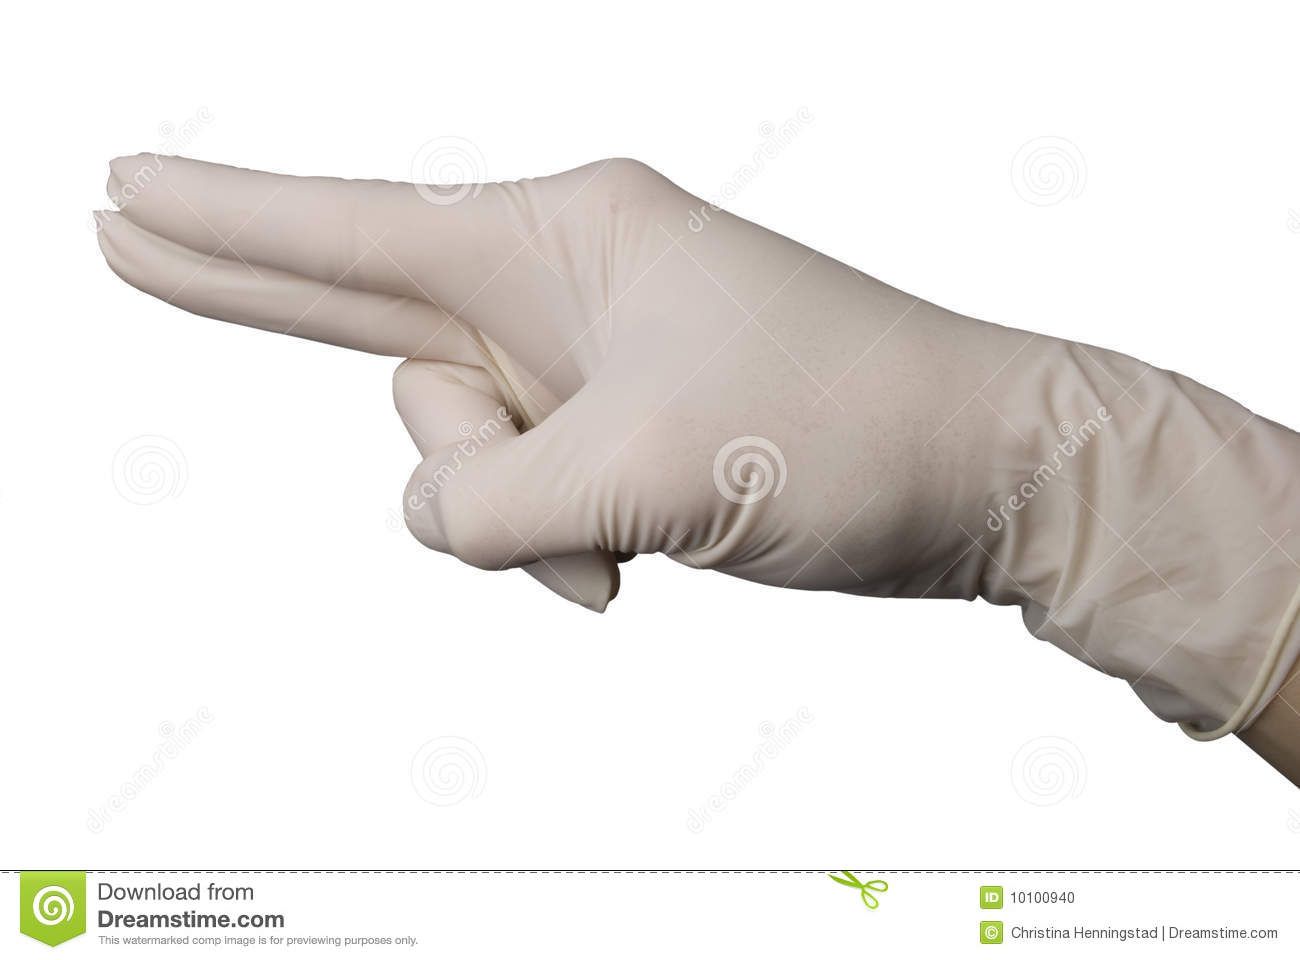 best of Hand Latex glove